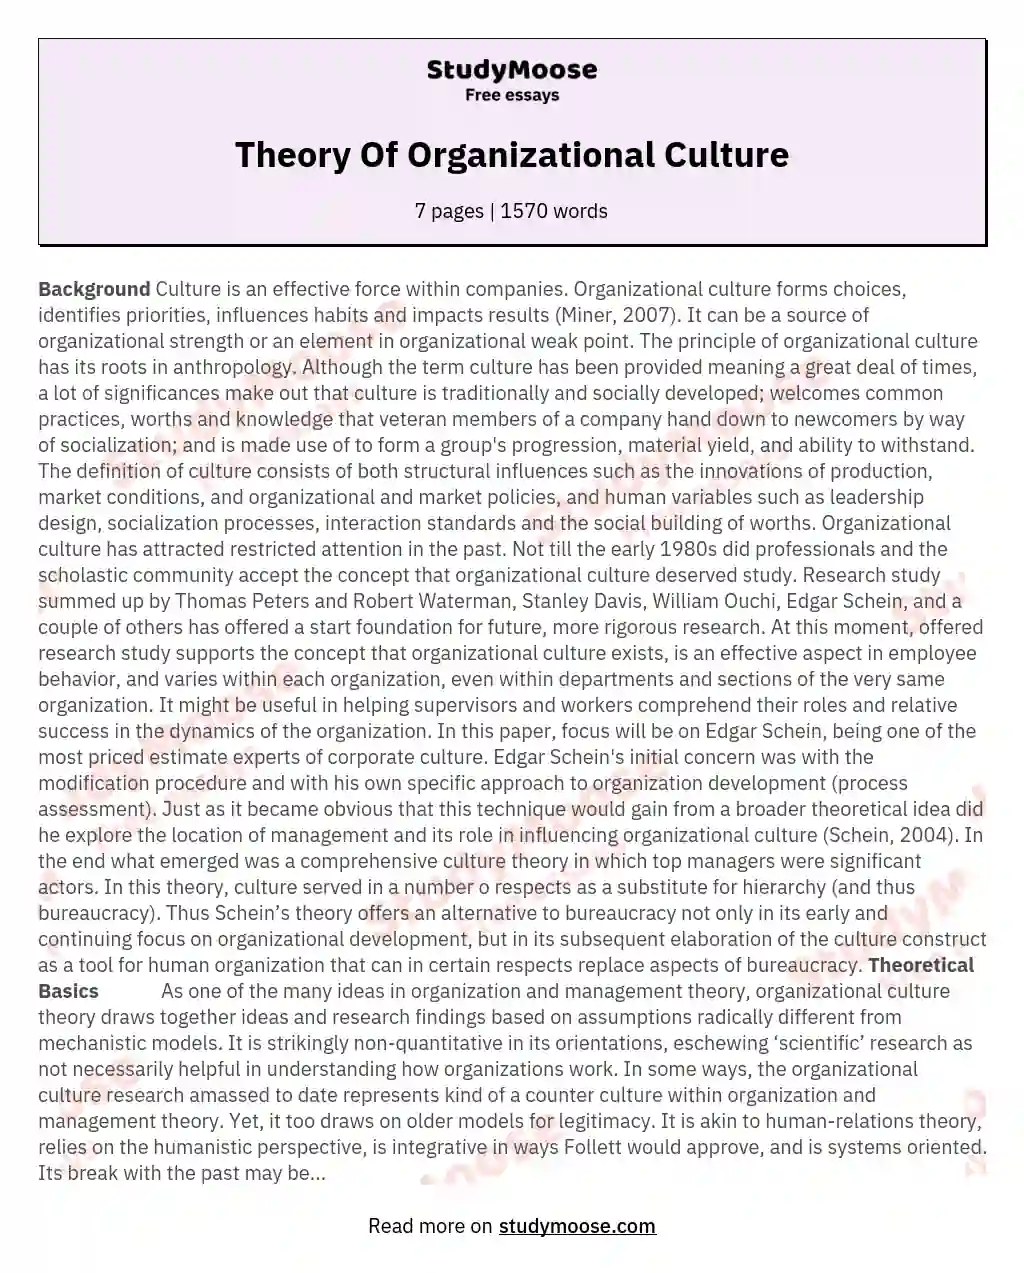 Theory Of Organizational Culture essay